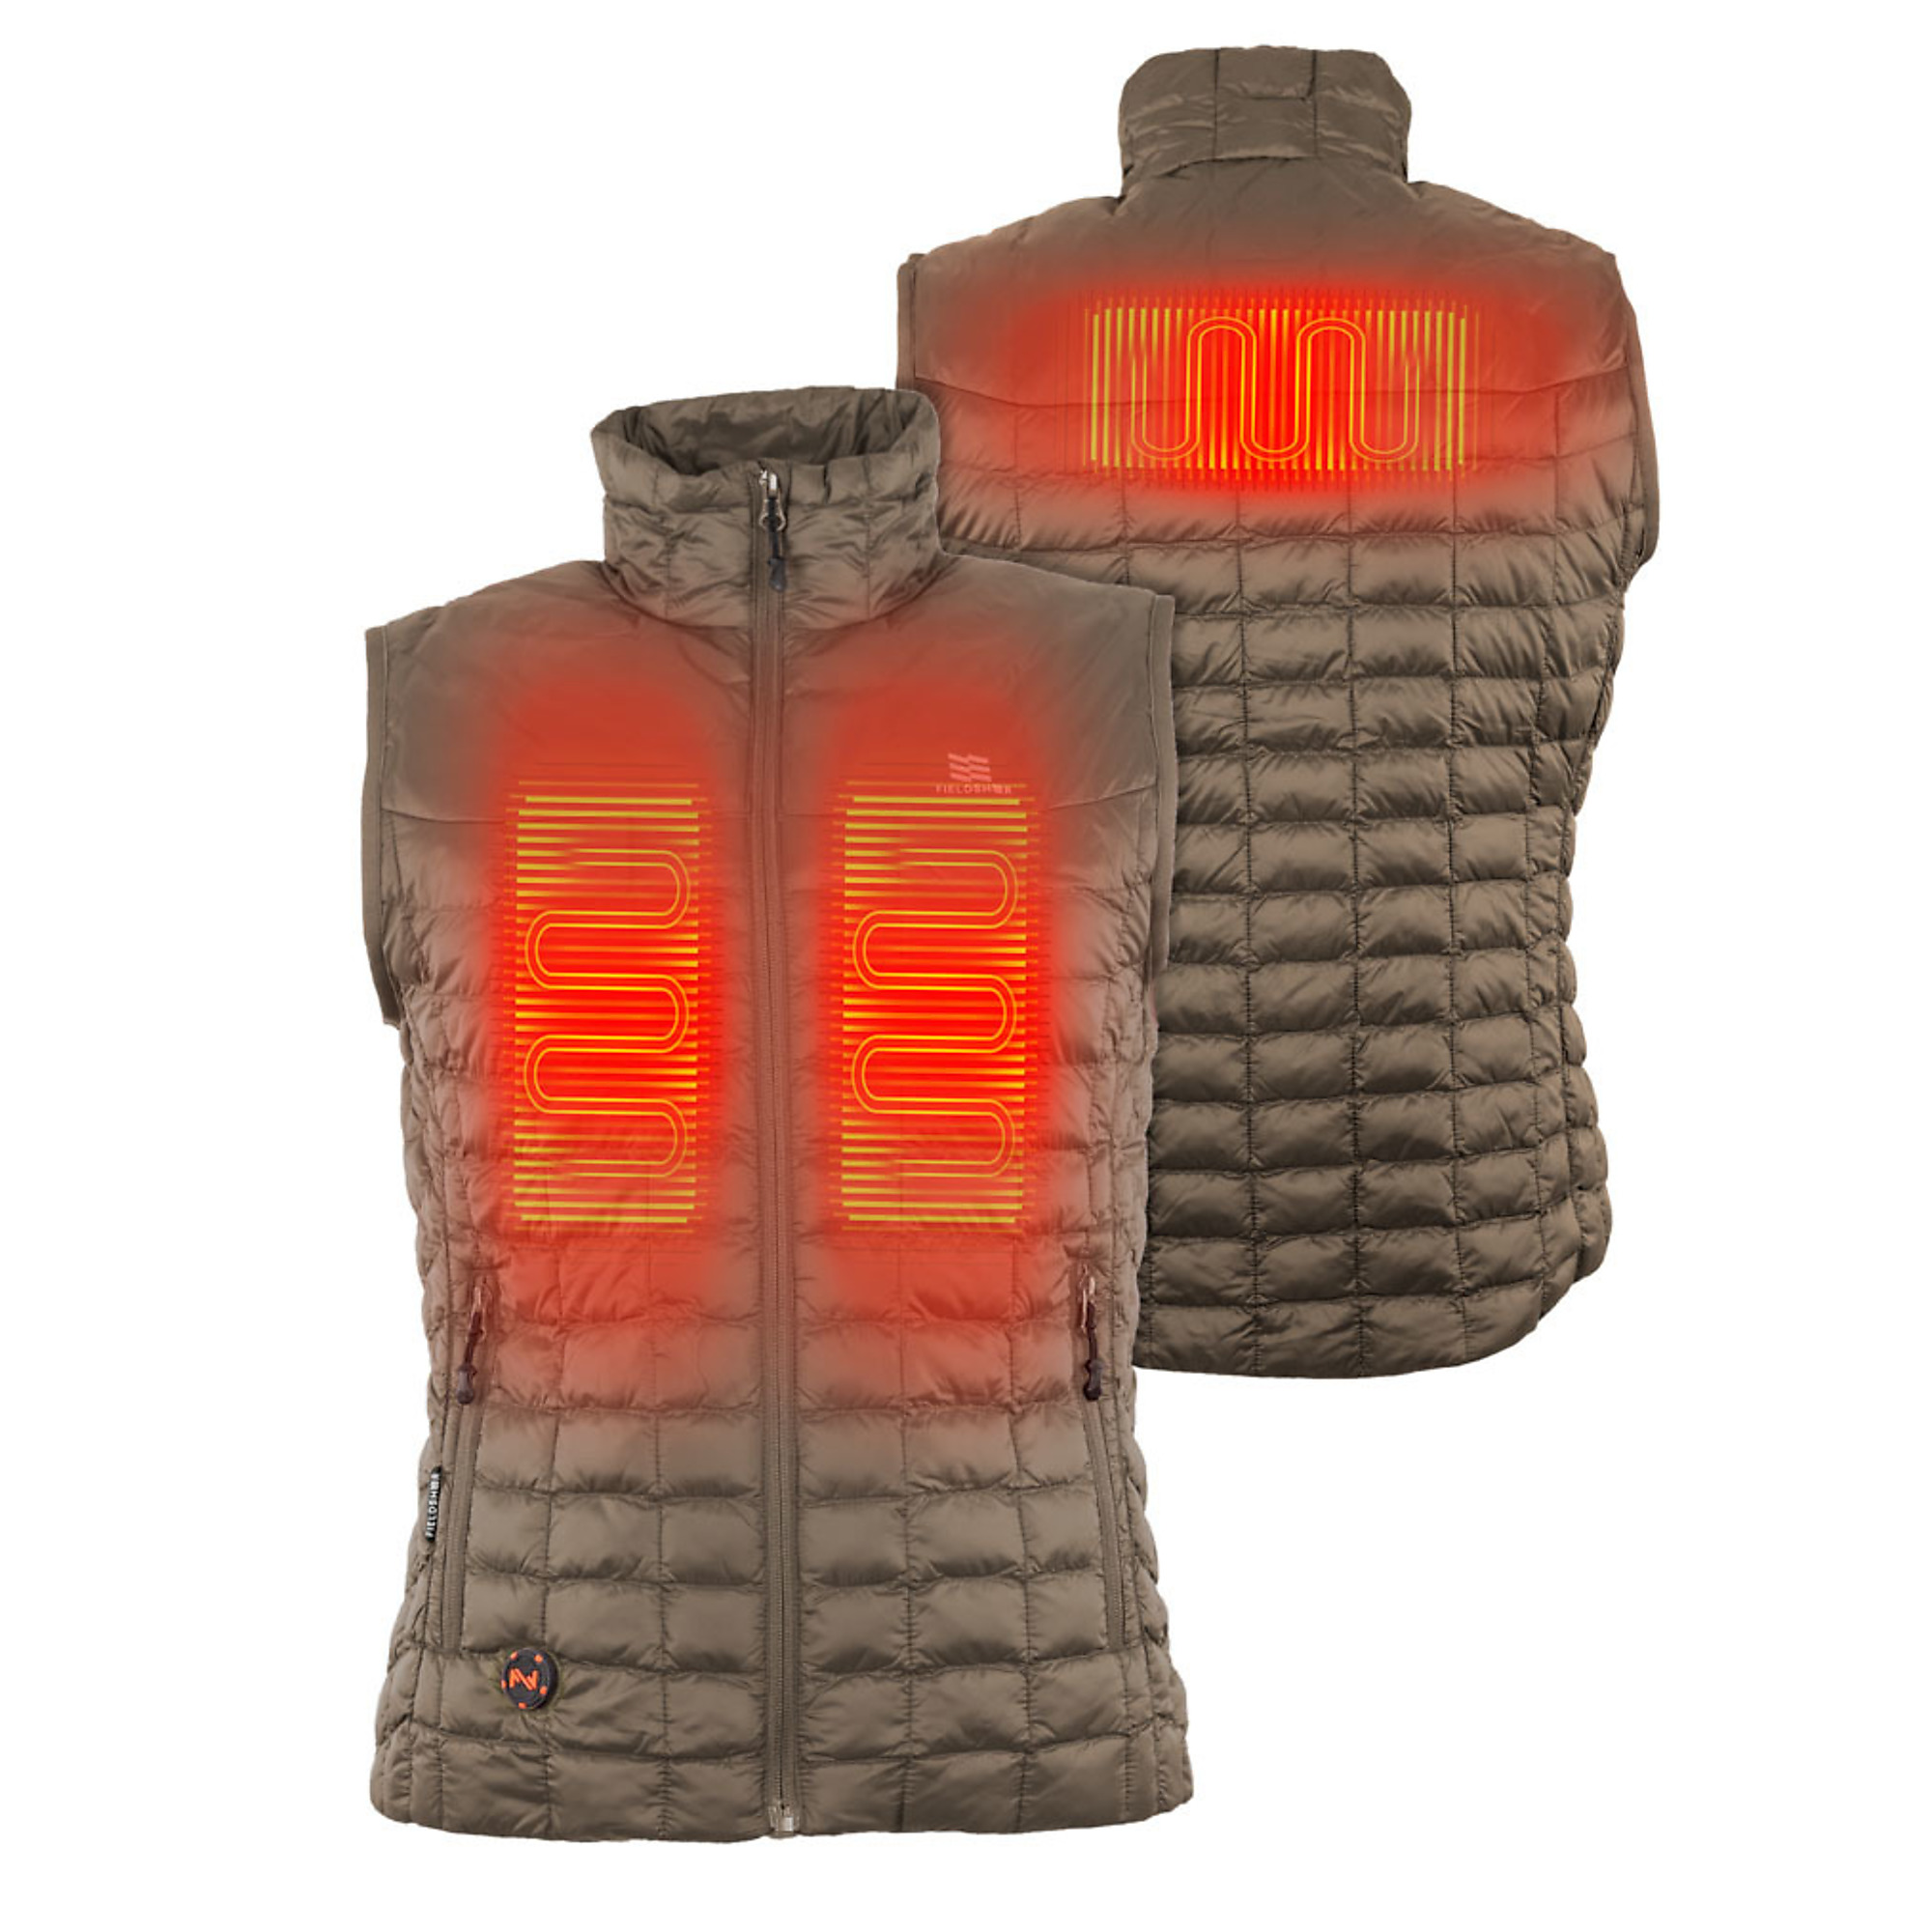 Fieldsheer, Women's 7.4v Backcountry Heated Vest, Size S, Color Tan, Model MWWV04340221